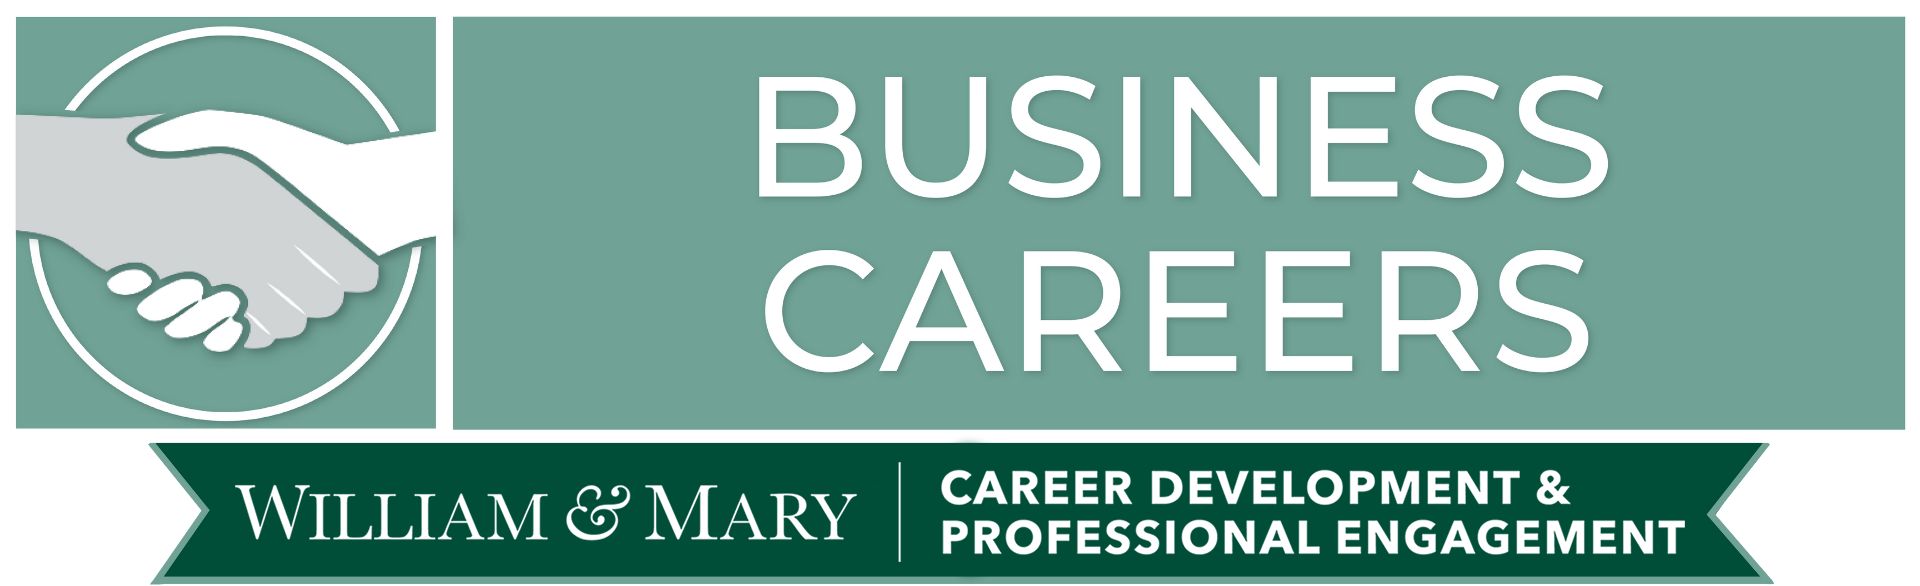 business-careers-header.png